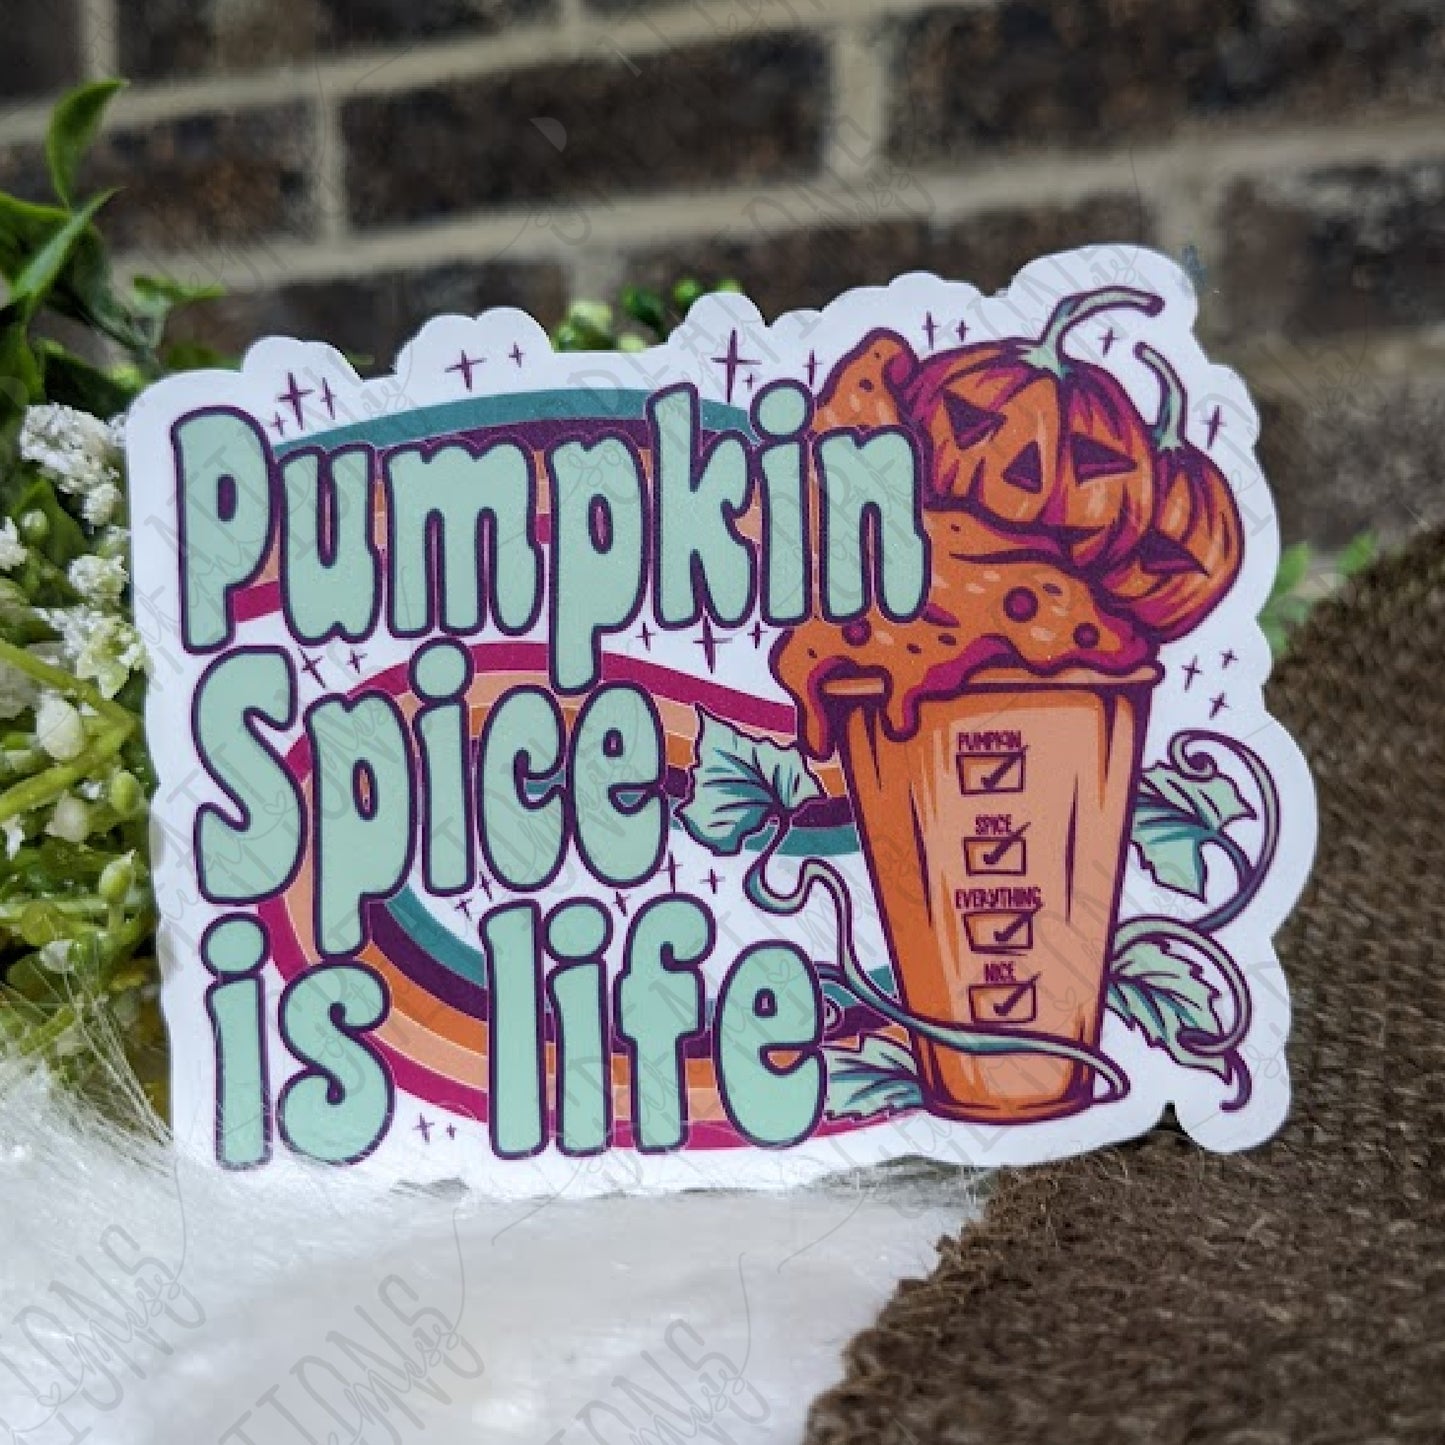 Pumpkin Spice is Life